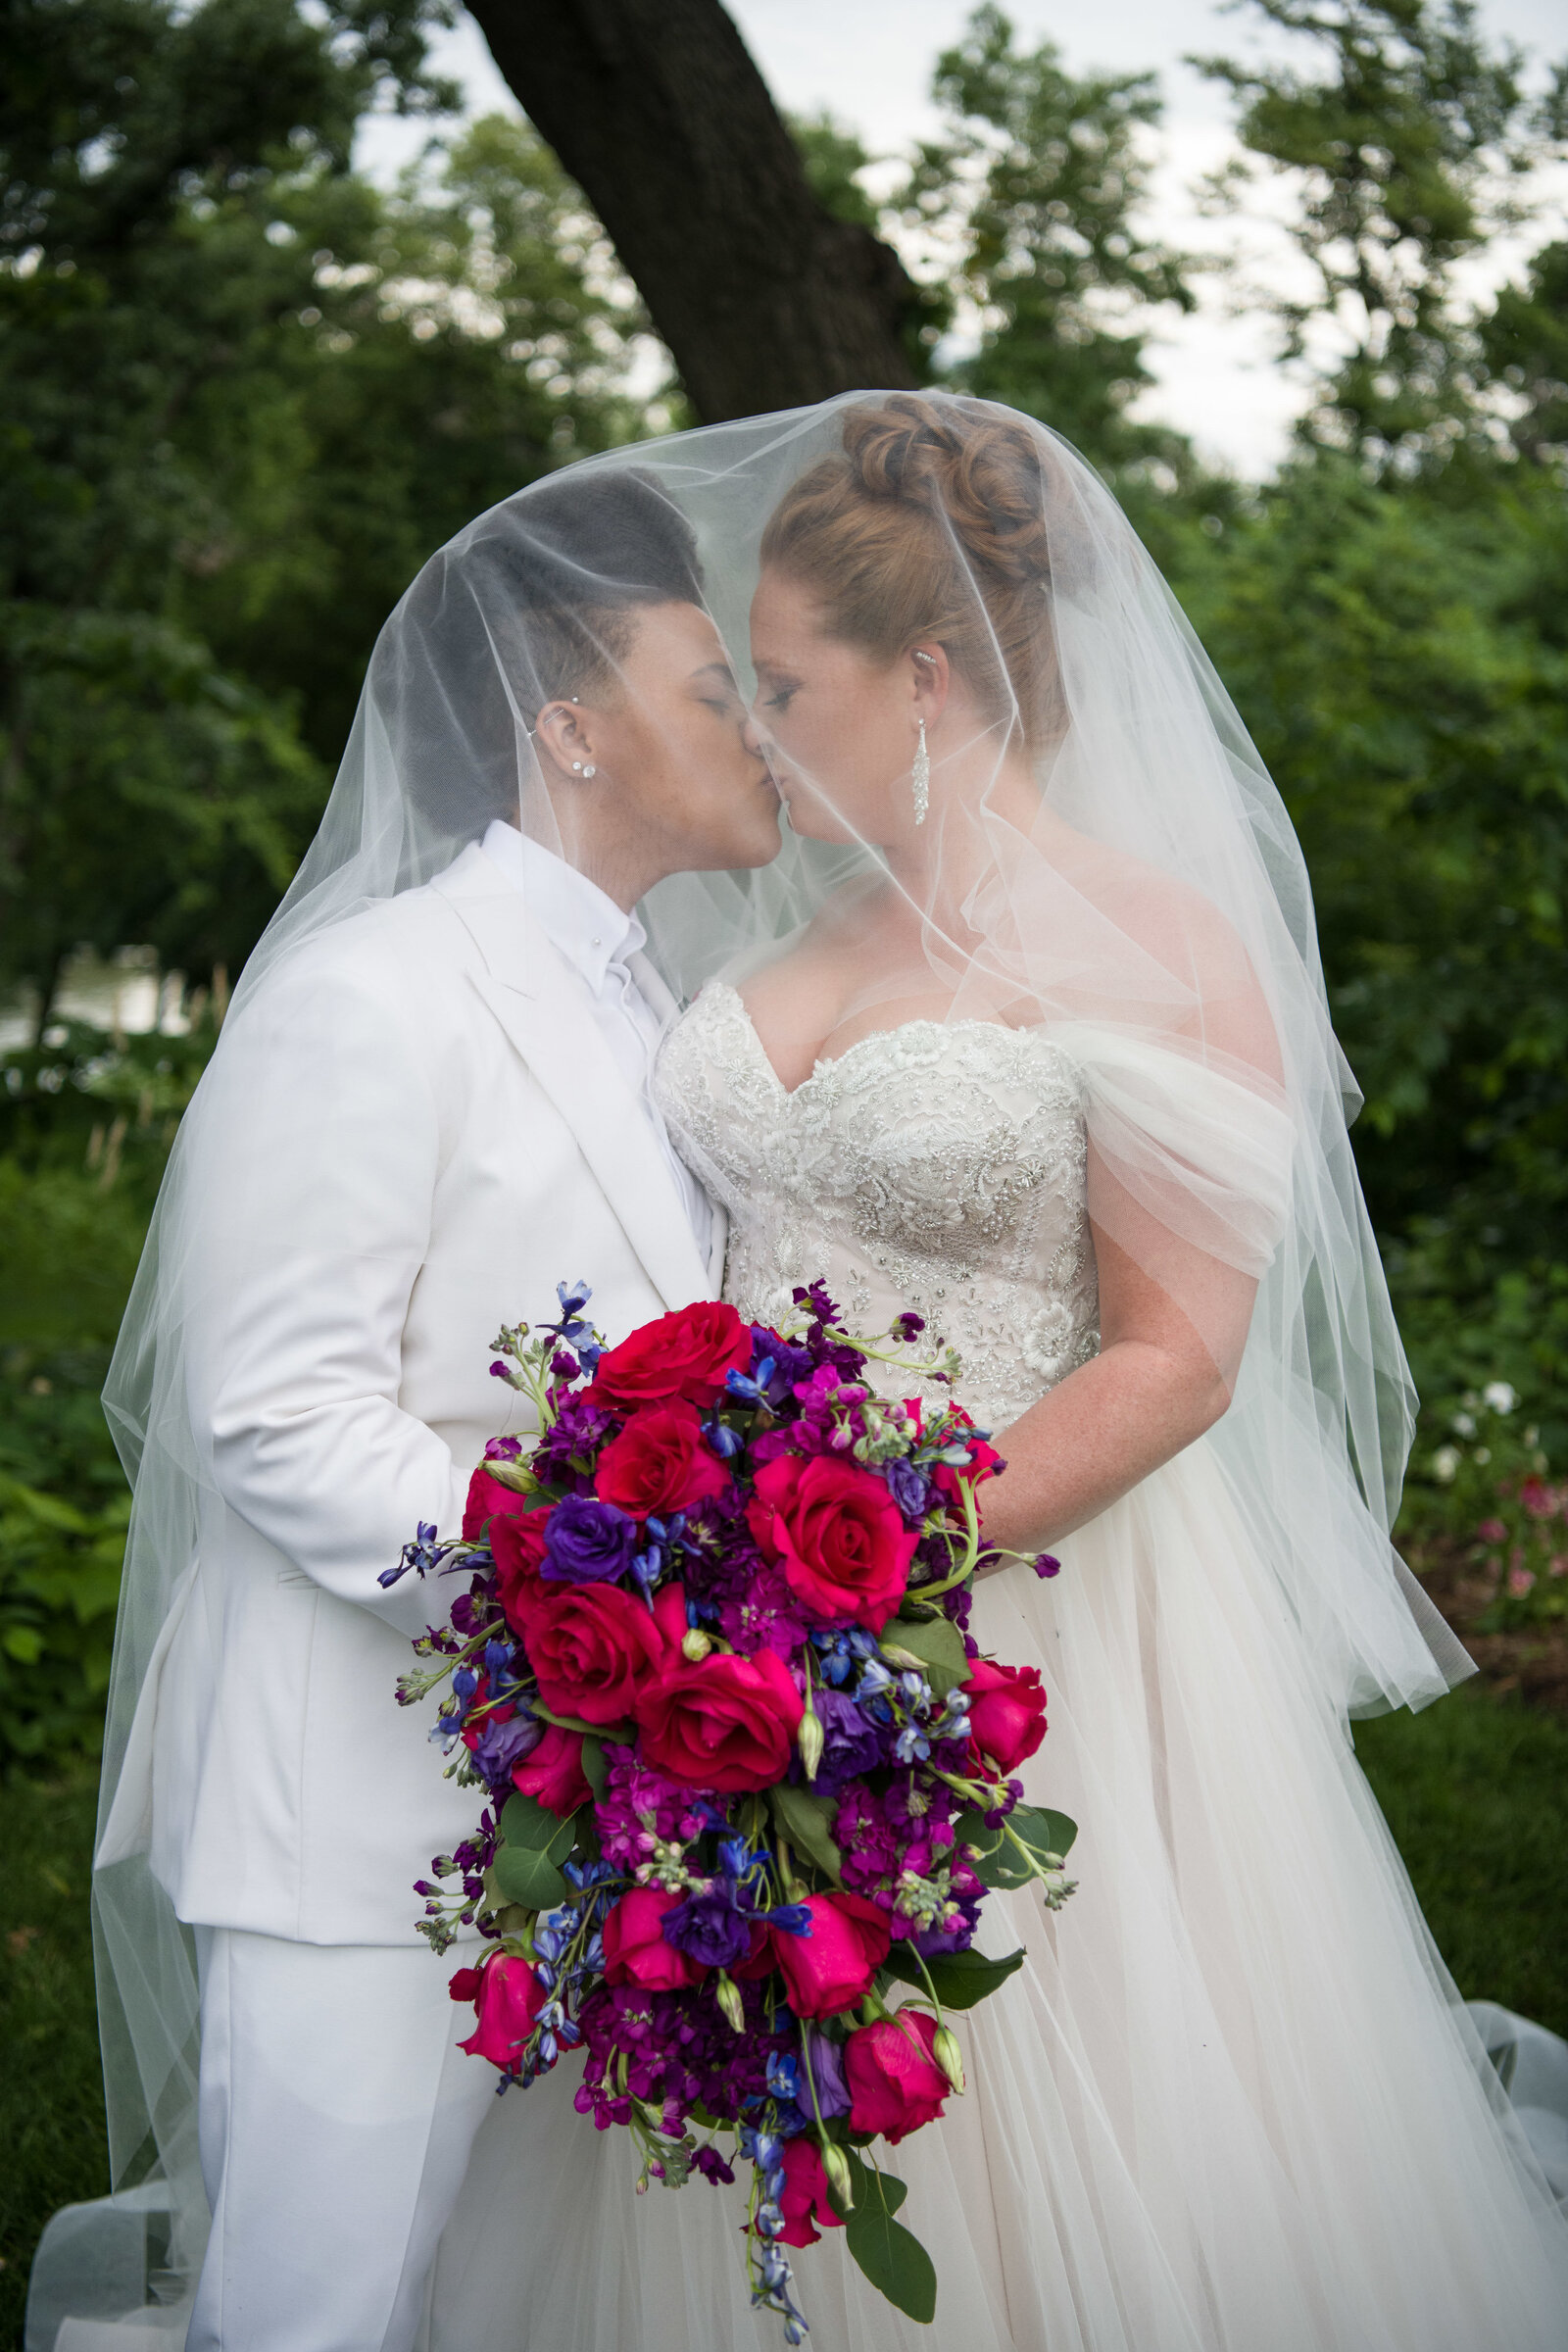 Lesbian brides kiss under veil on wedding day.